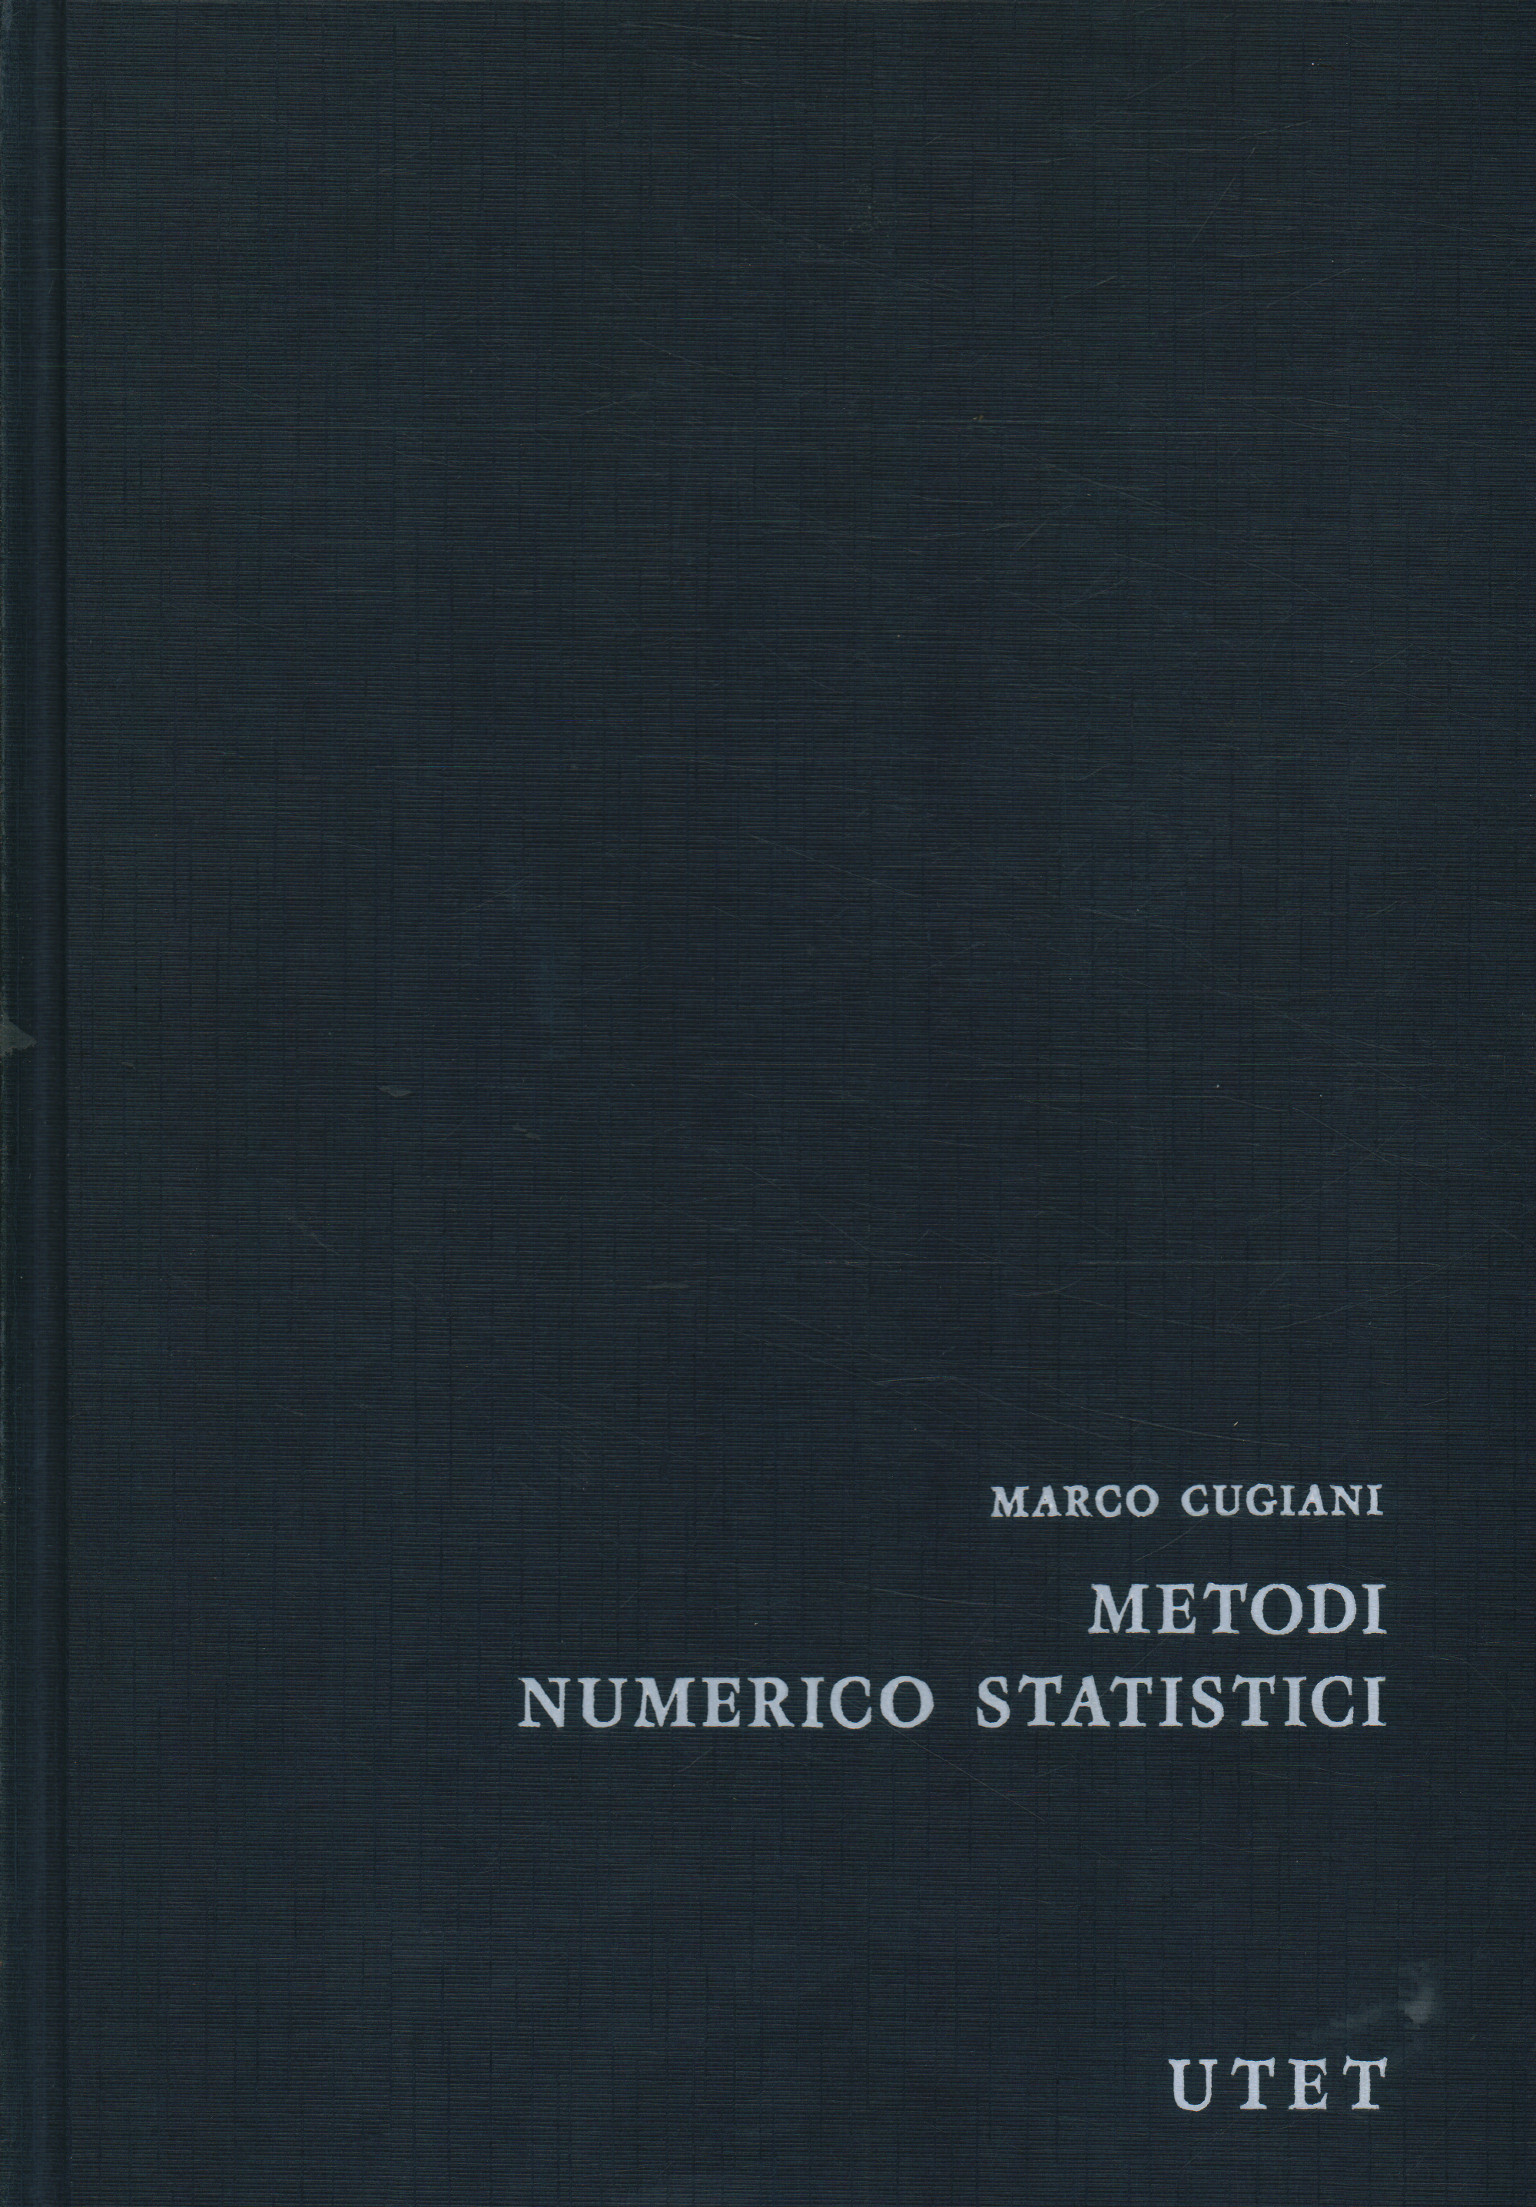 Statistical numerical methods